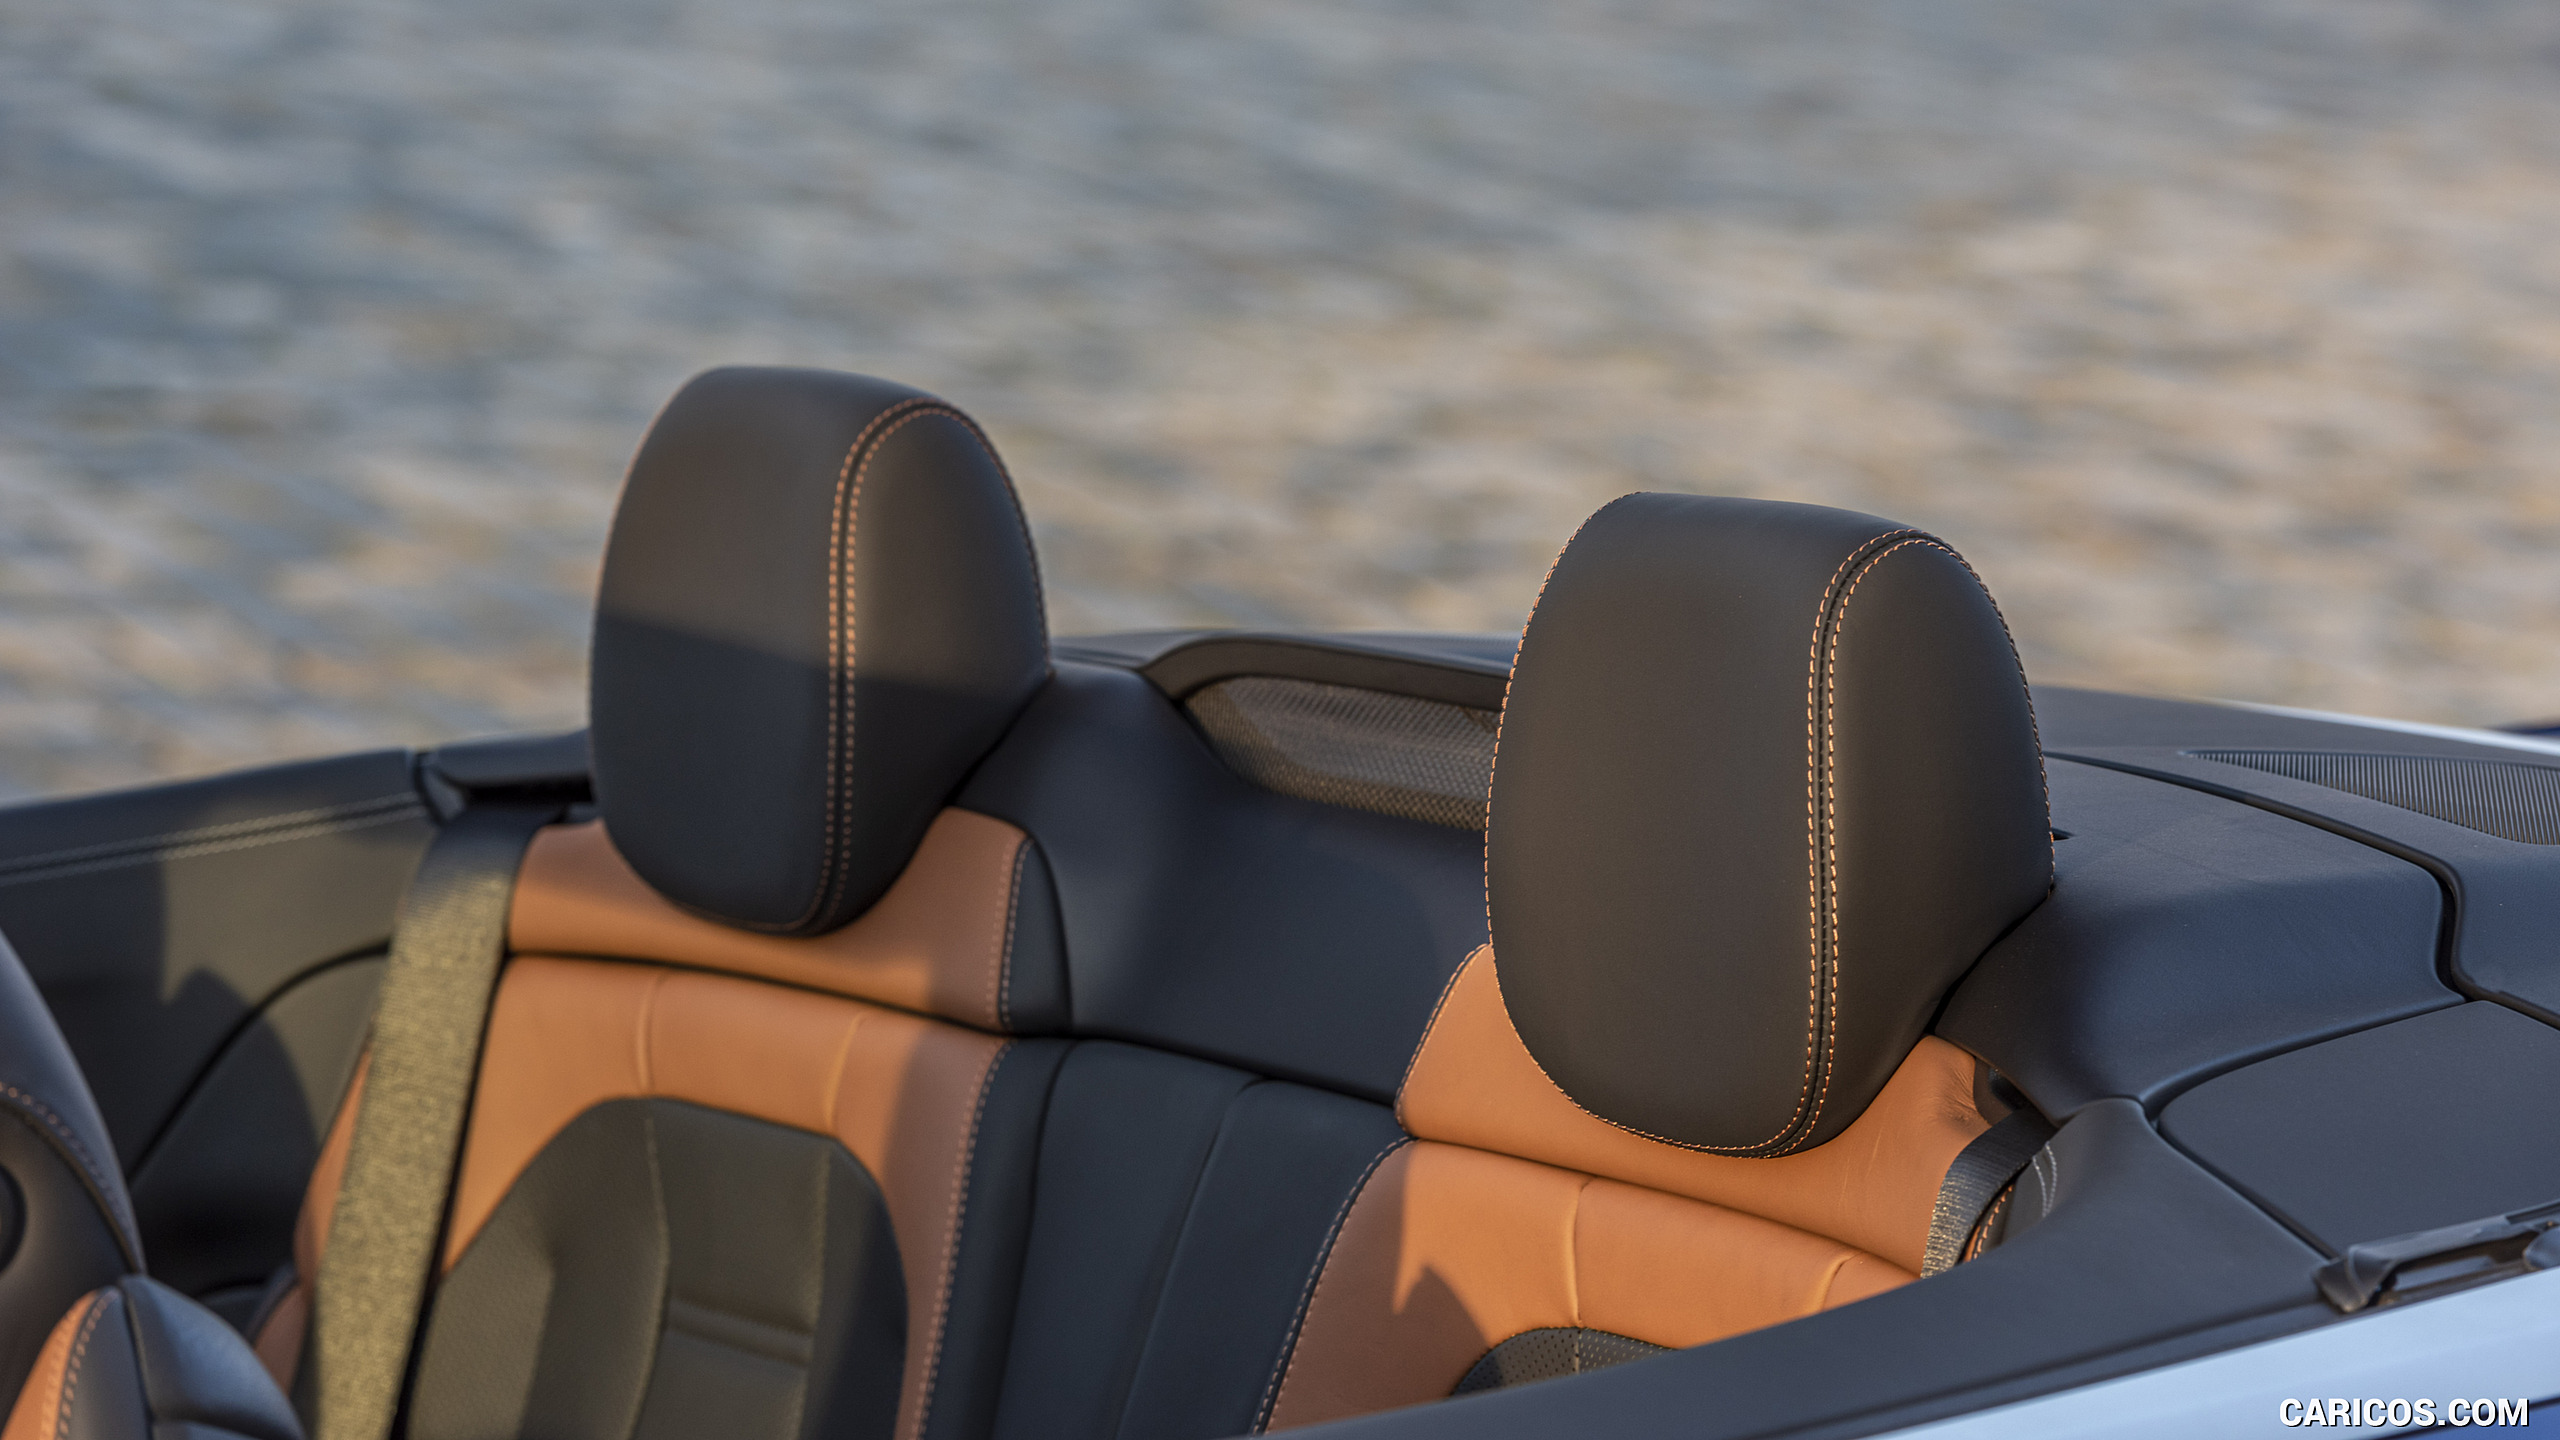 2021 Mercedes-AMG E 53 4MATIC+ Cabriolet - Interior, Rear Seats, #97 of 166